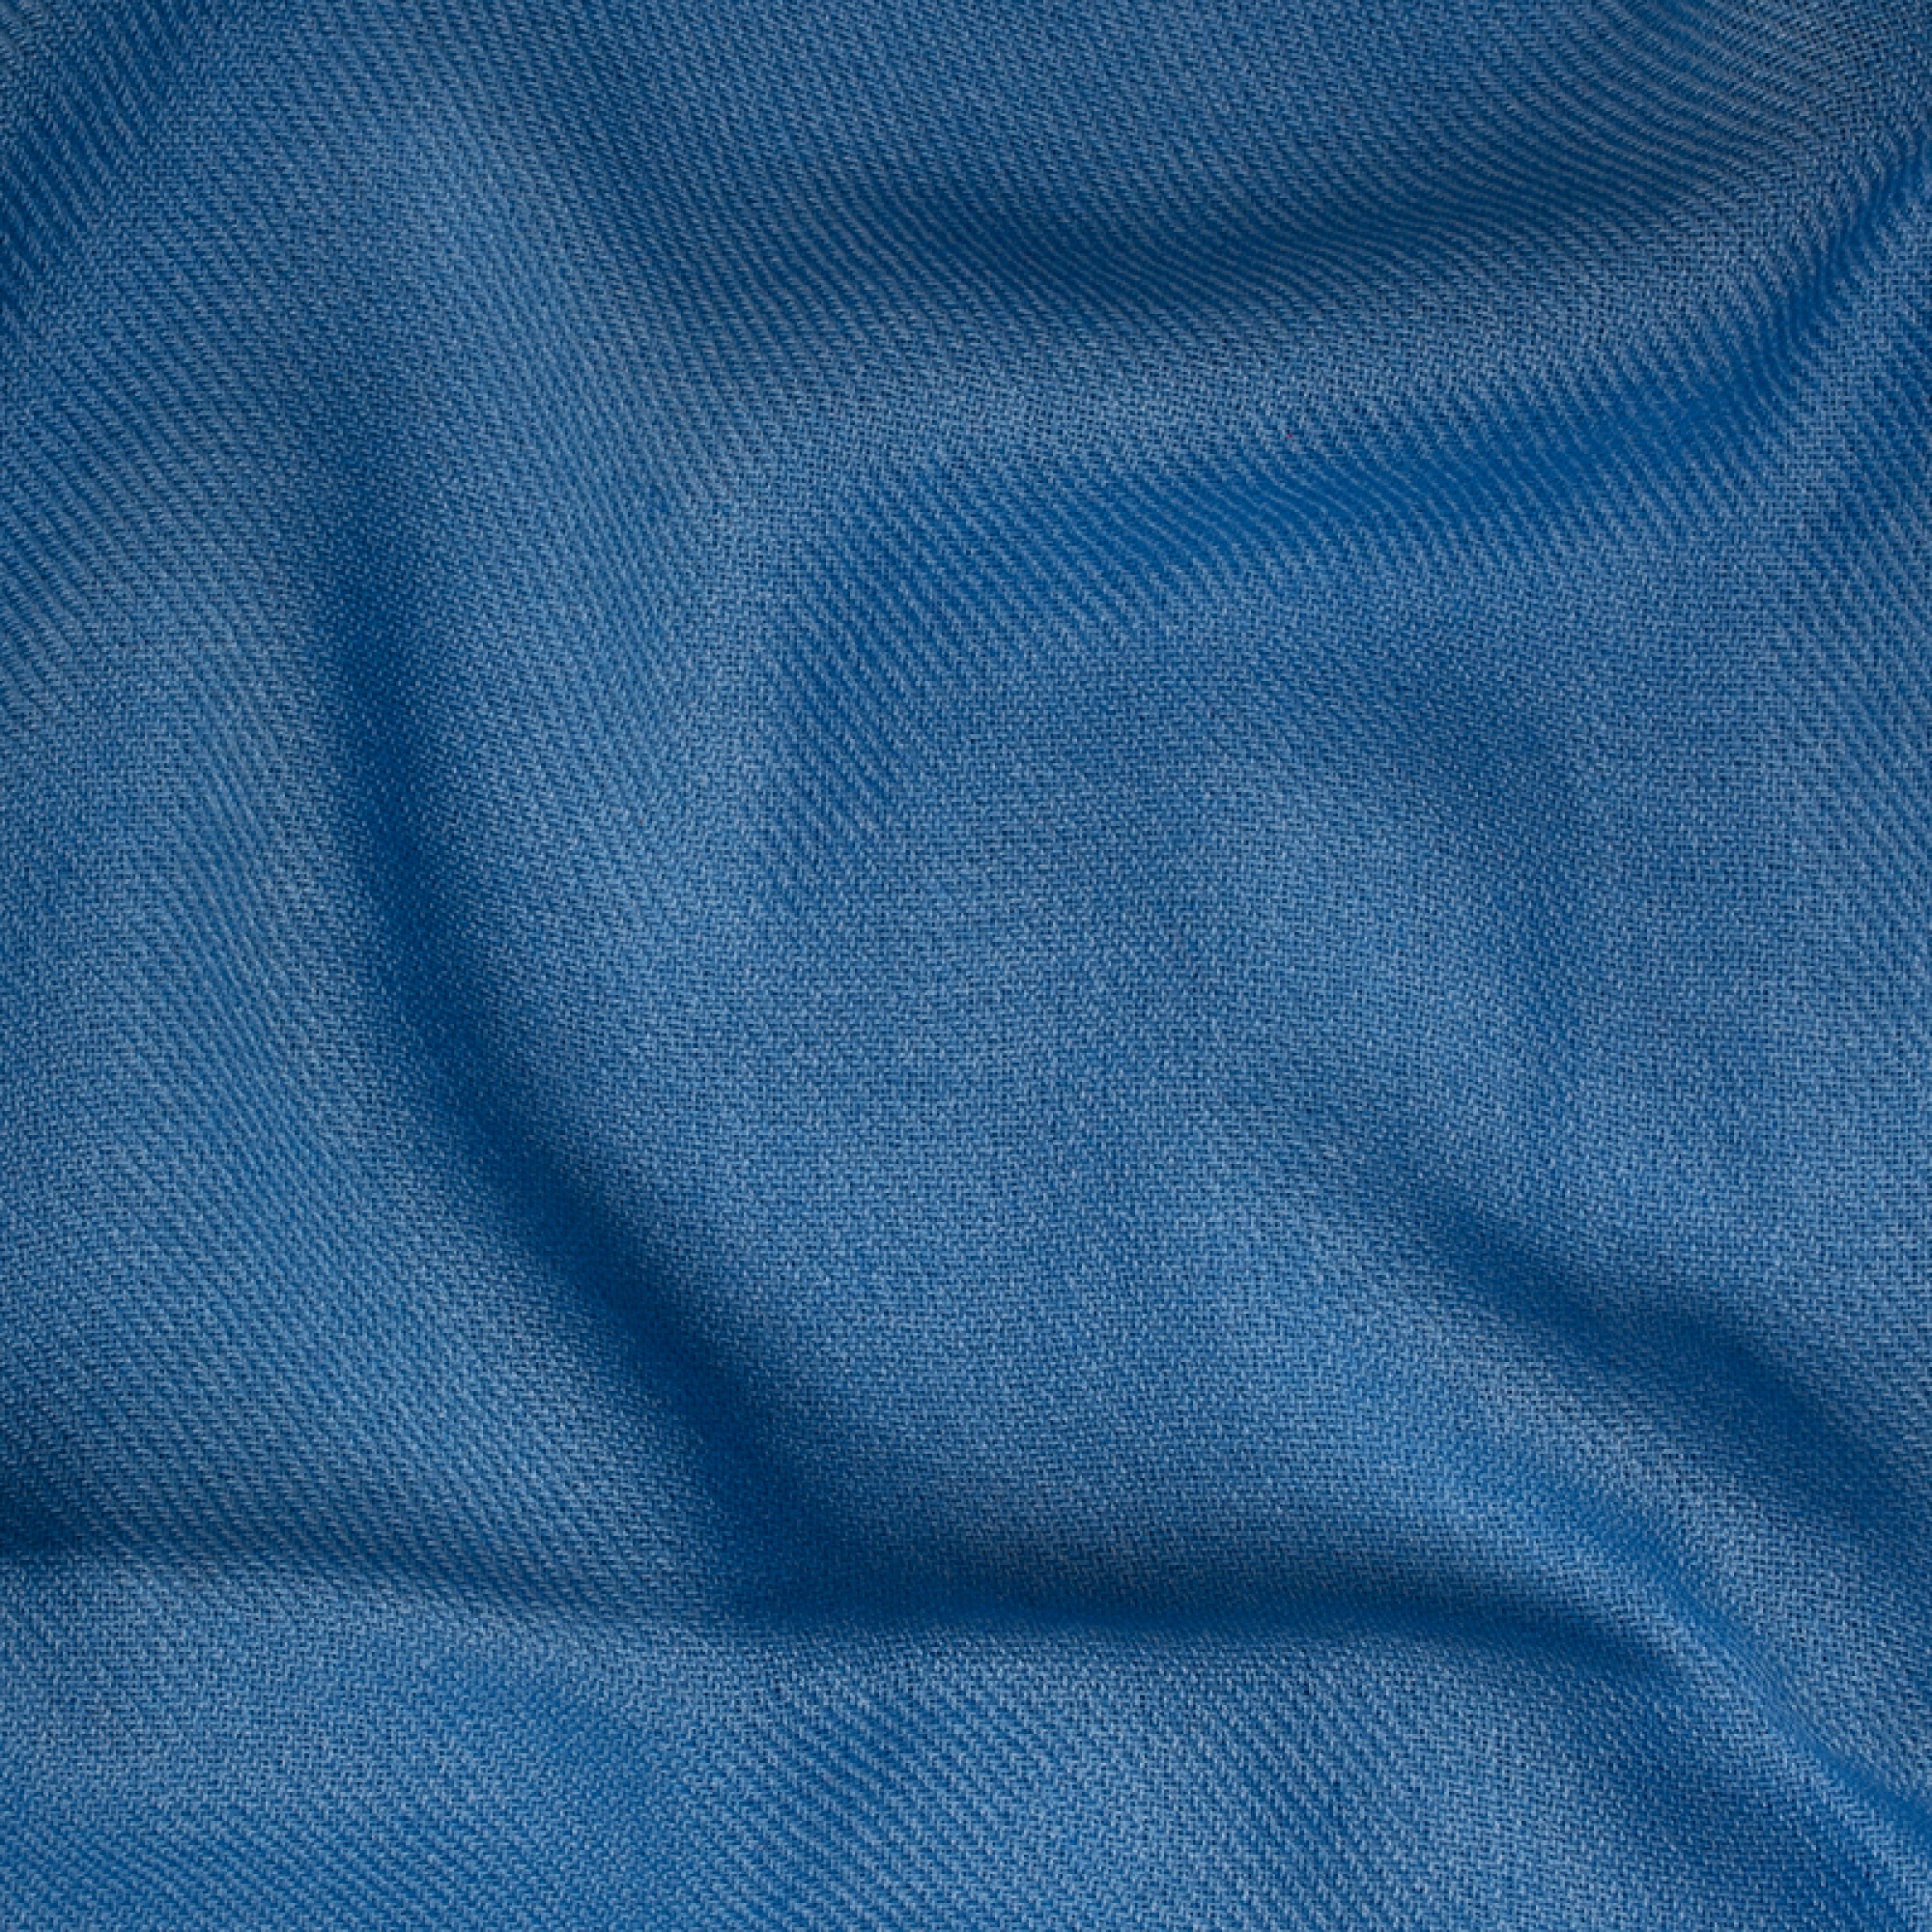 Cachemire pull femme toodoo plain m 180 x 220 bleu miro 180 x 220 cm